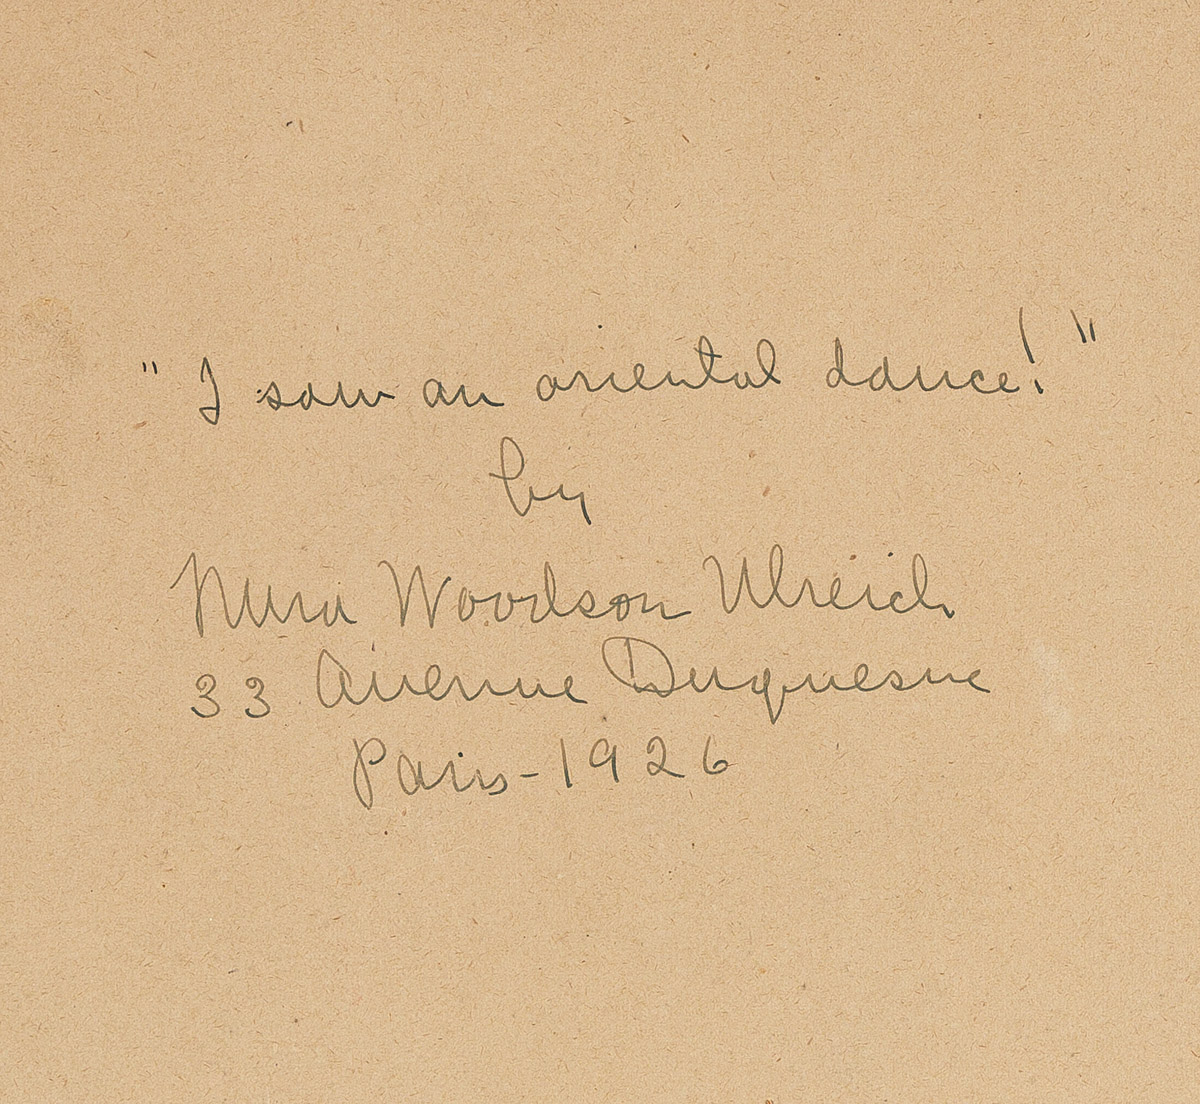 NURA WOODSON ULREICH (1899-1950) I Saw An Oriental Dance.